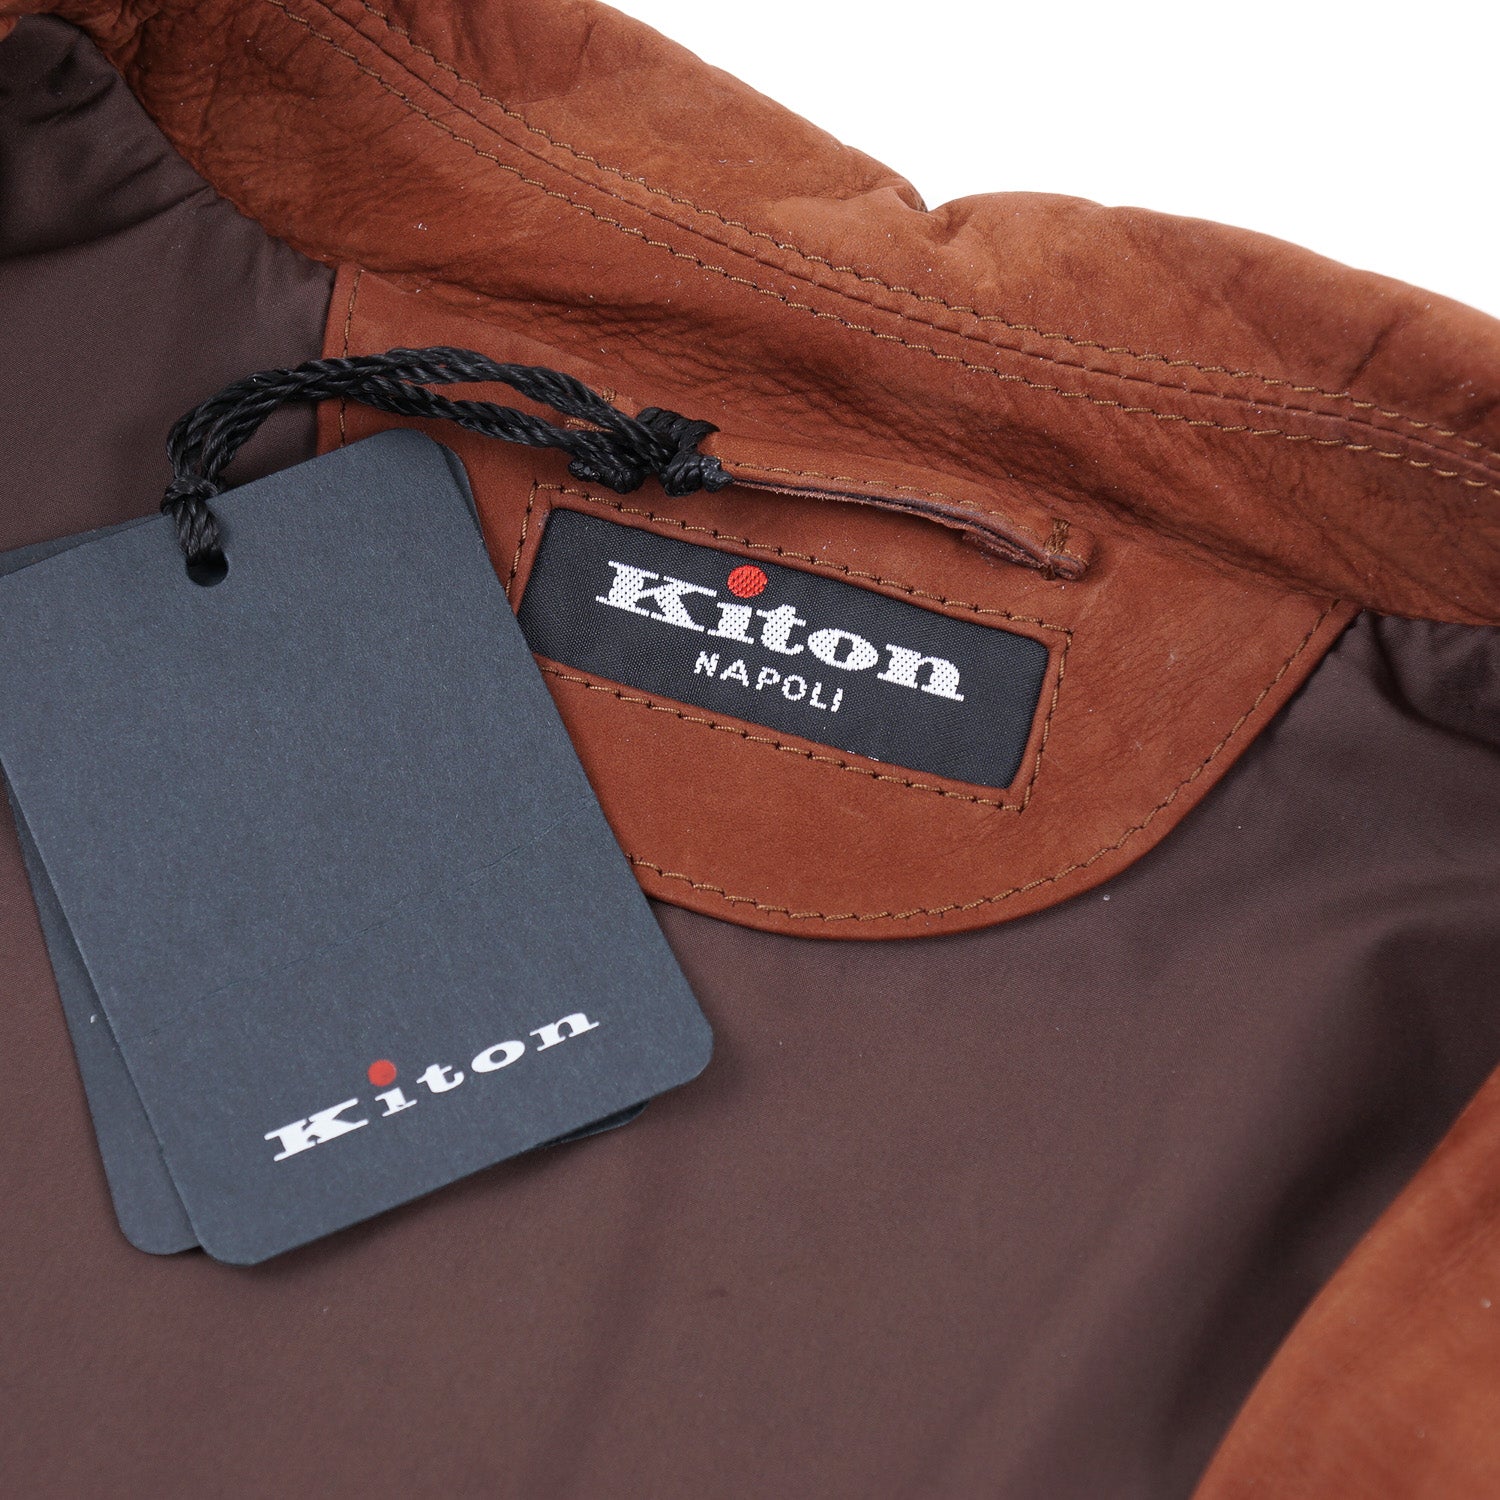 Kiton Soft Calfskin Leather Bomber Jacket - Top Shelf Apparel